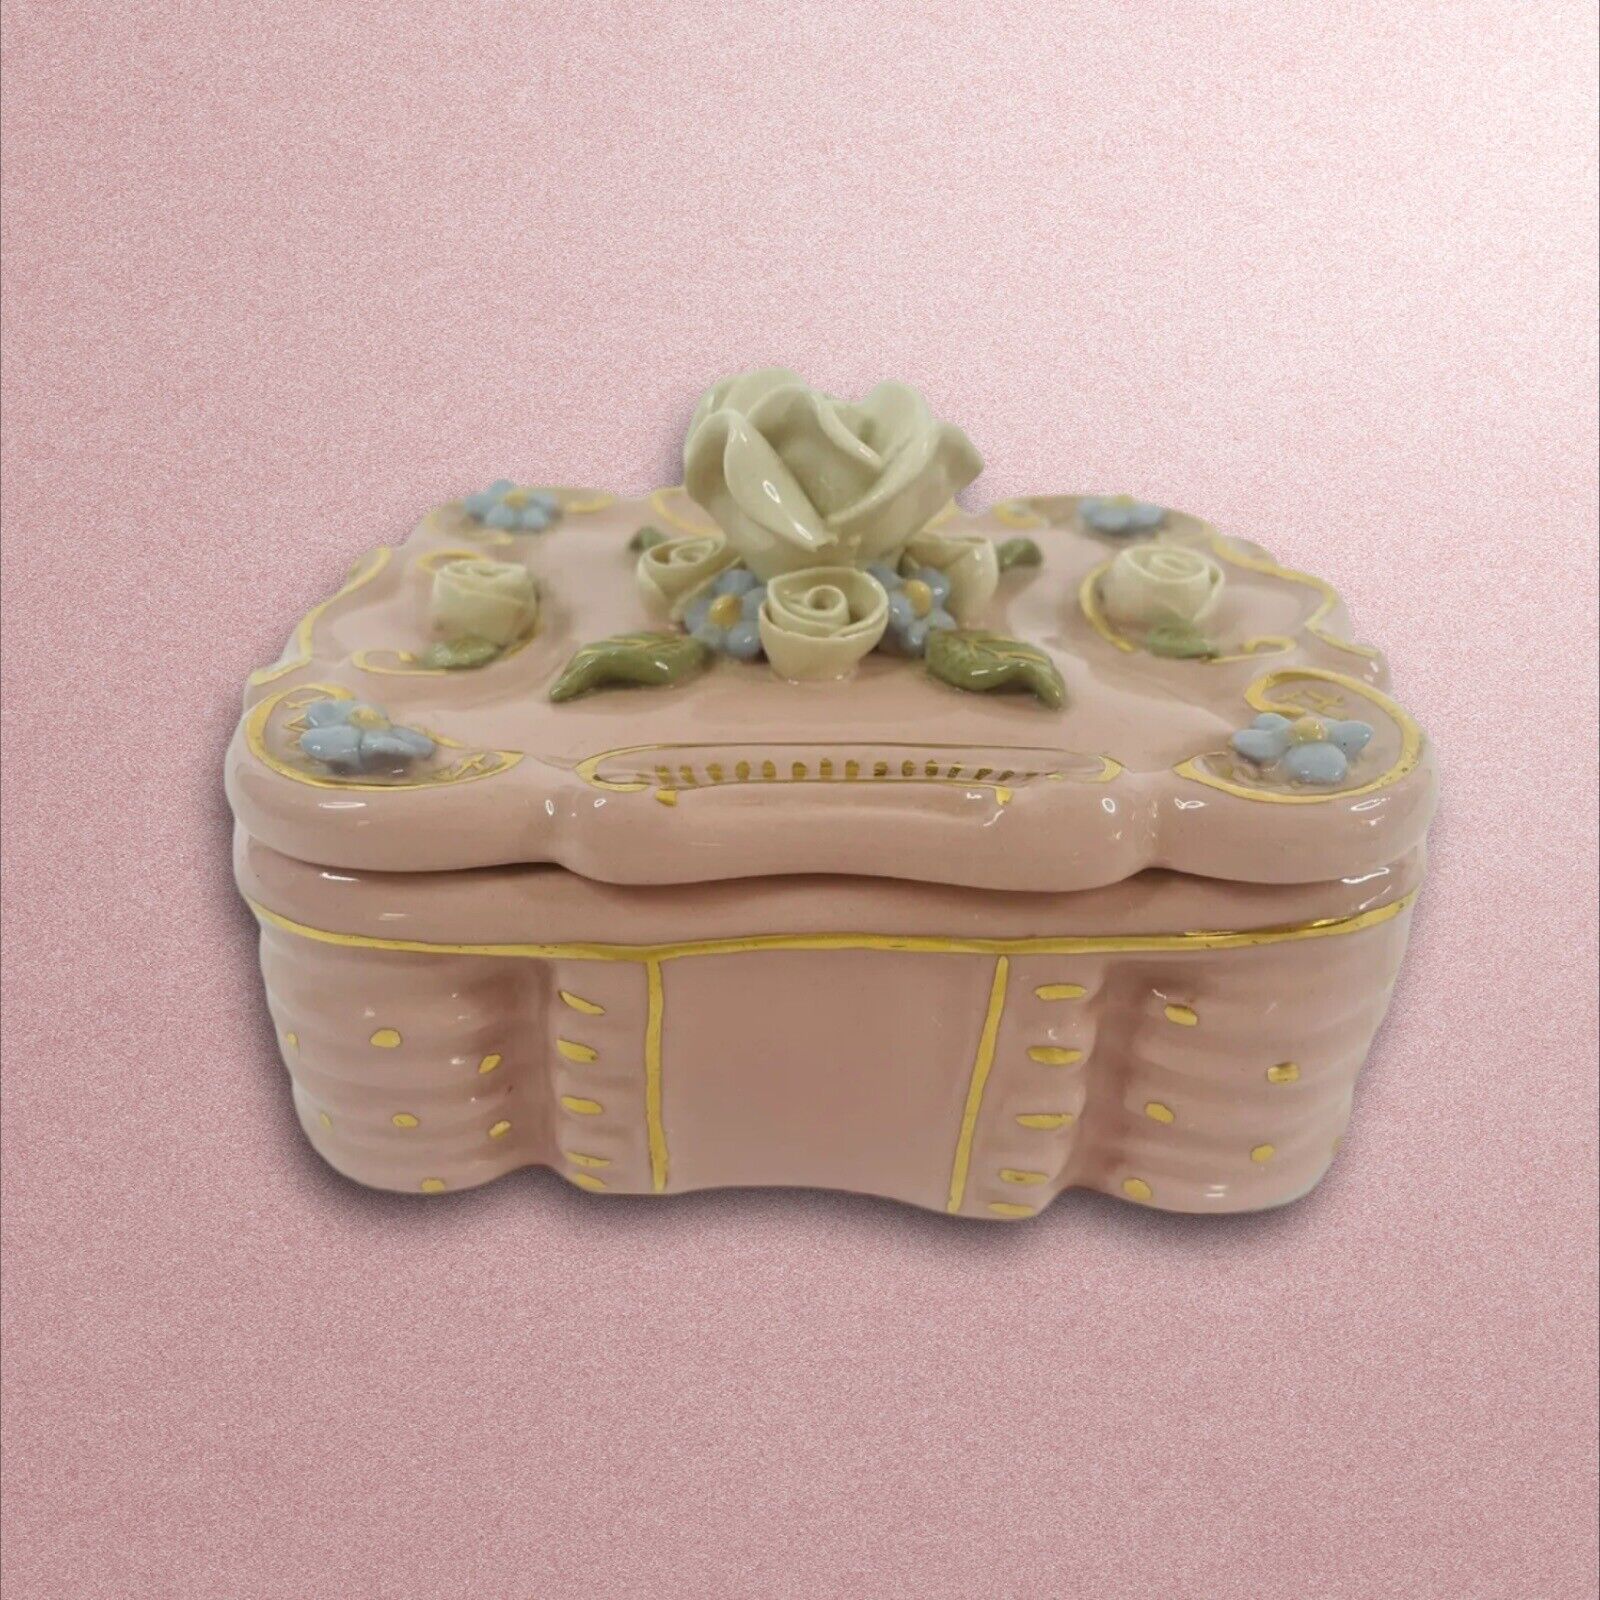 Antique 1940’s NANCY CHINA Pottery Pink Trinket Box/Jewelry Box - Hand Made